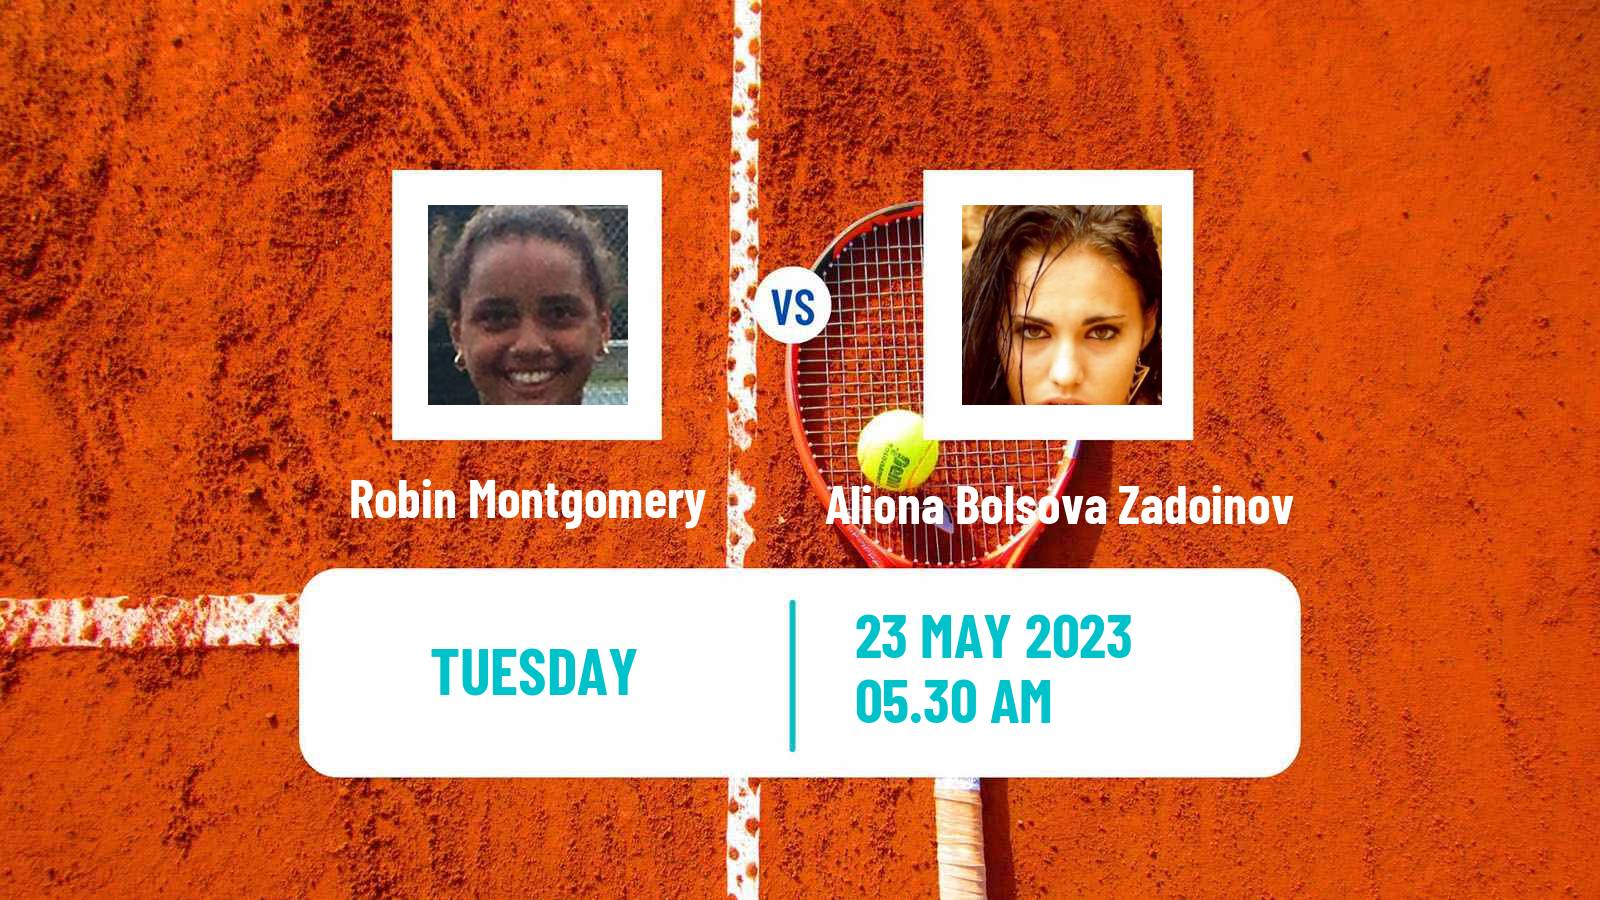 Tennis WTA Roland Garros Robin Montgomery - Aliona Bolsova Zadoinov